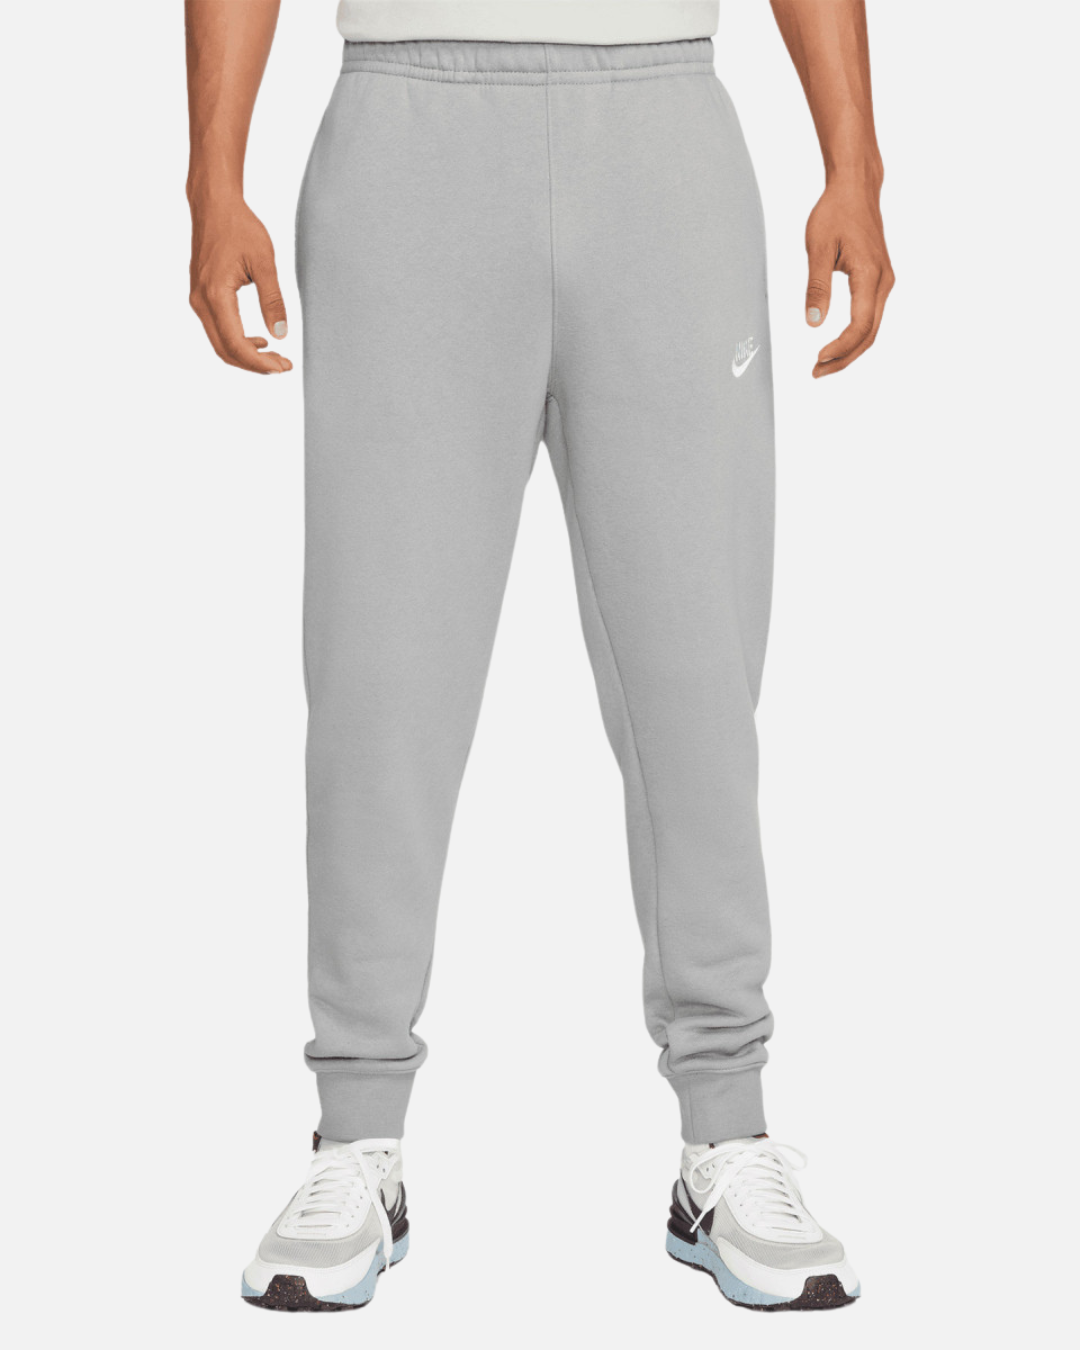 Pantalon jogging Nike Fleece - Gris clair